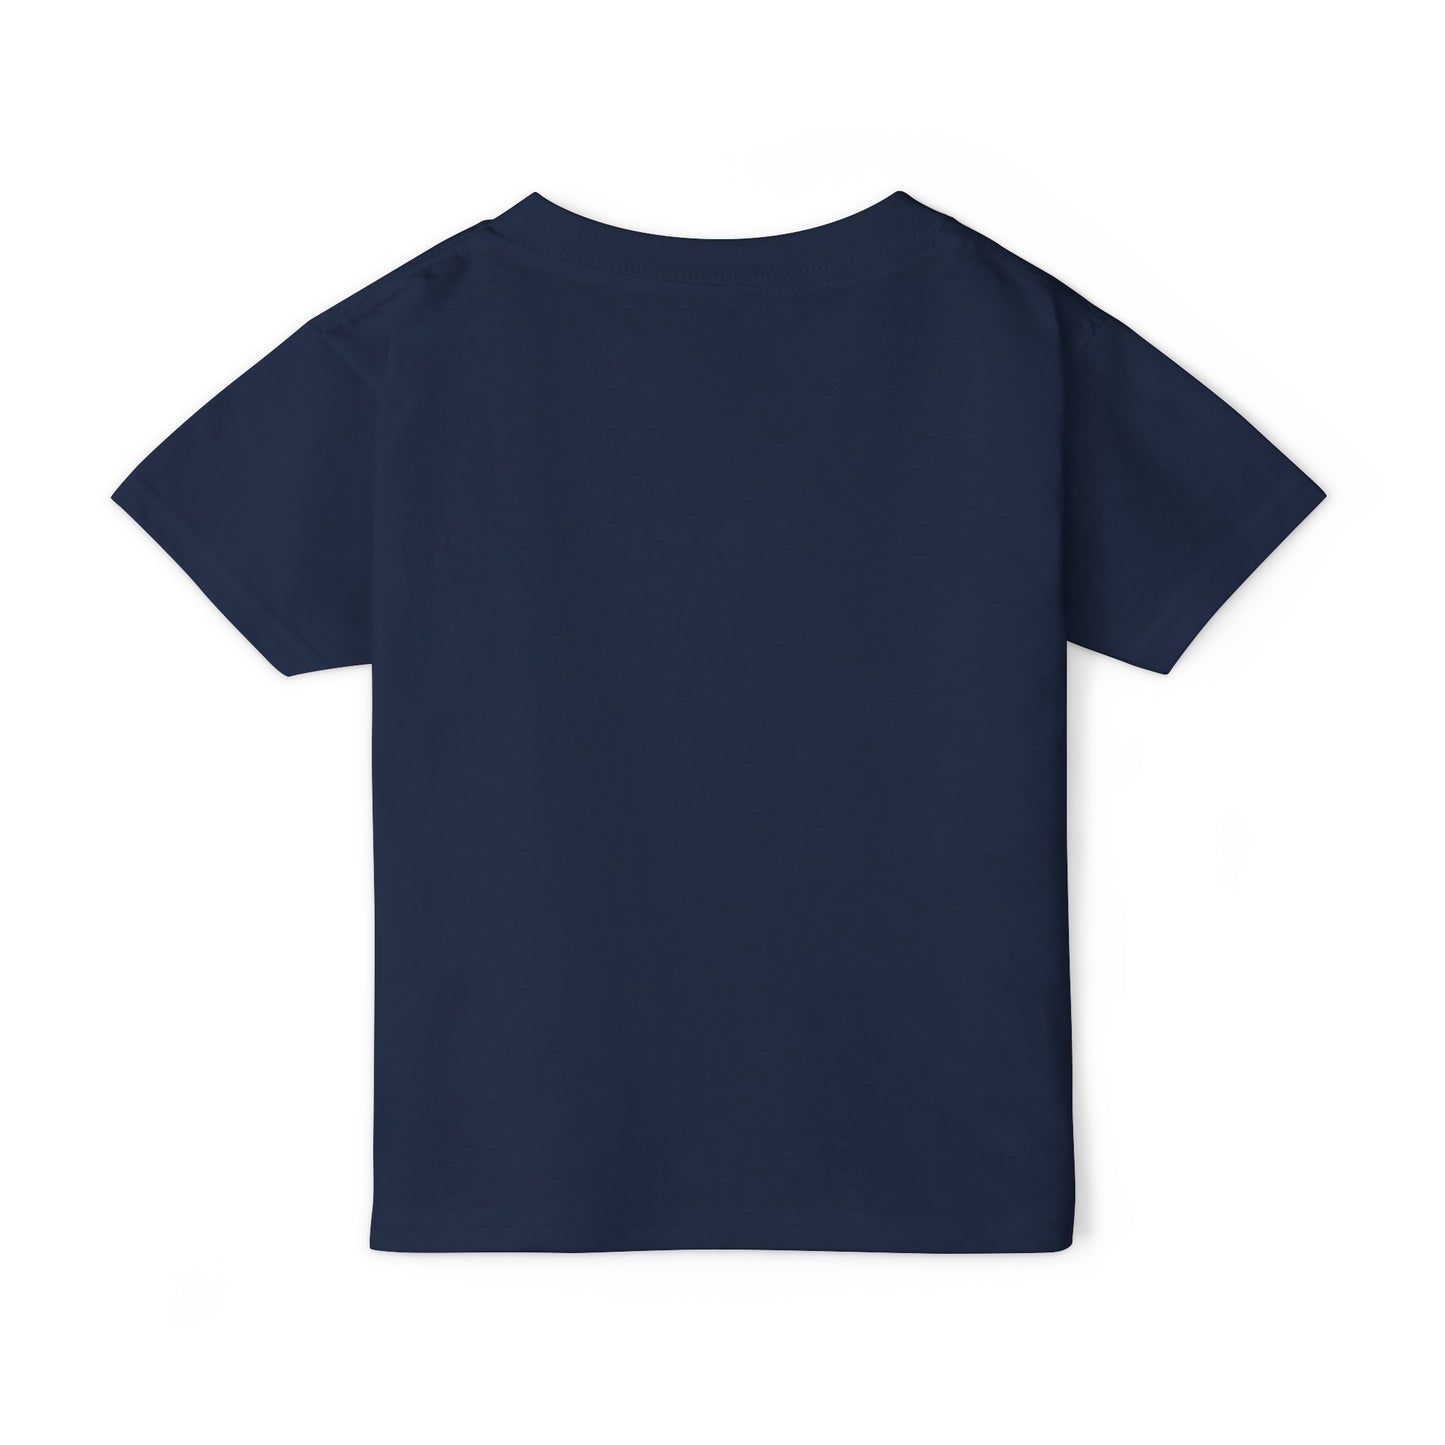 Family - Future Graduate - Heavy Cotton Toddler T-Shirt